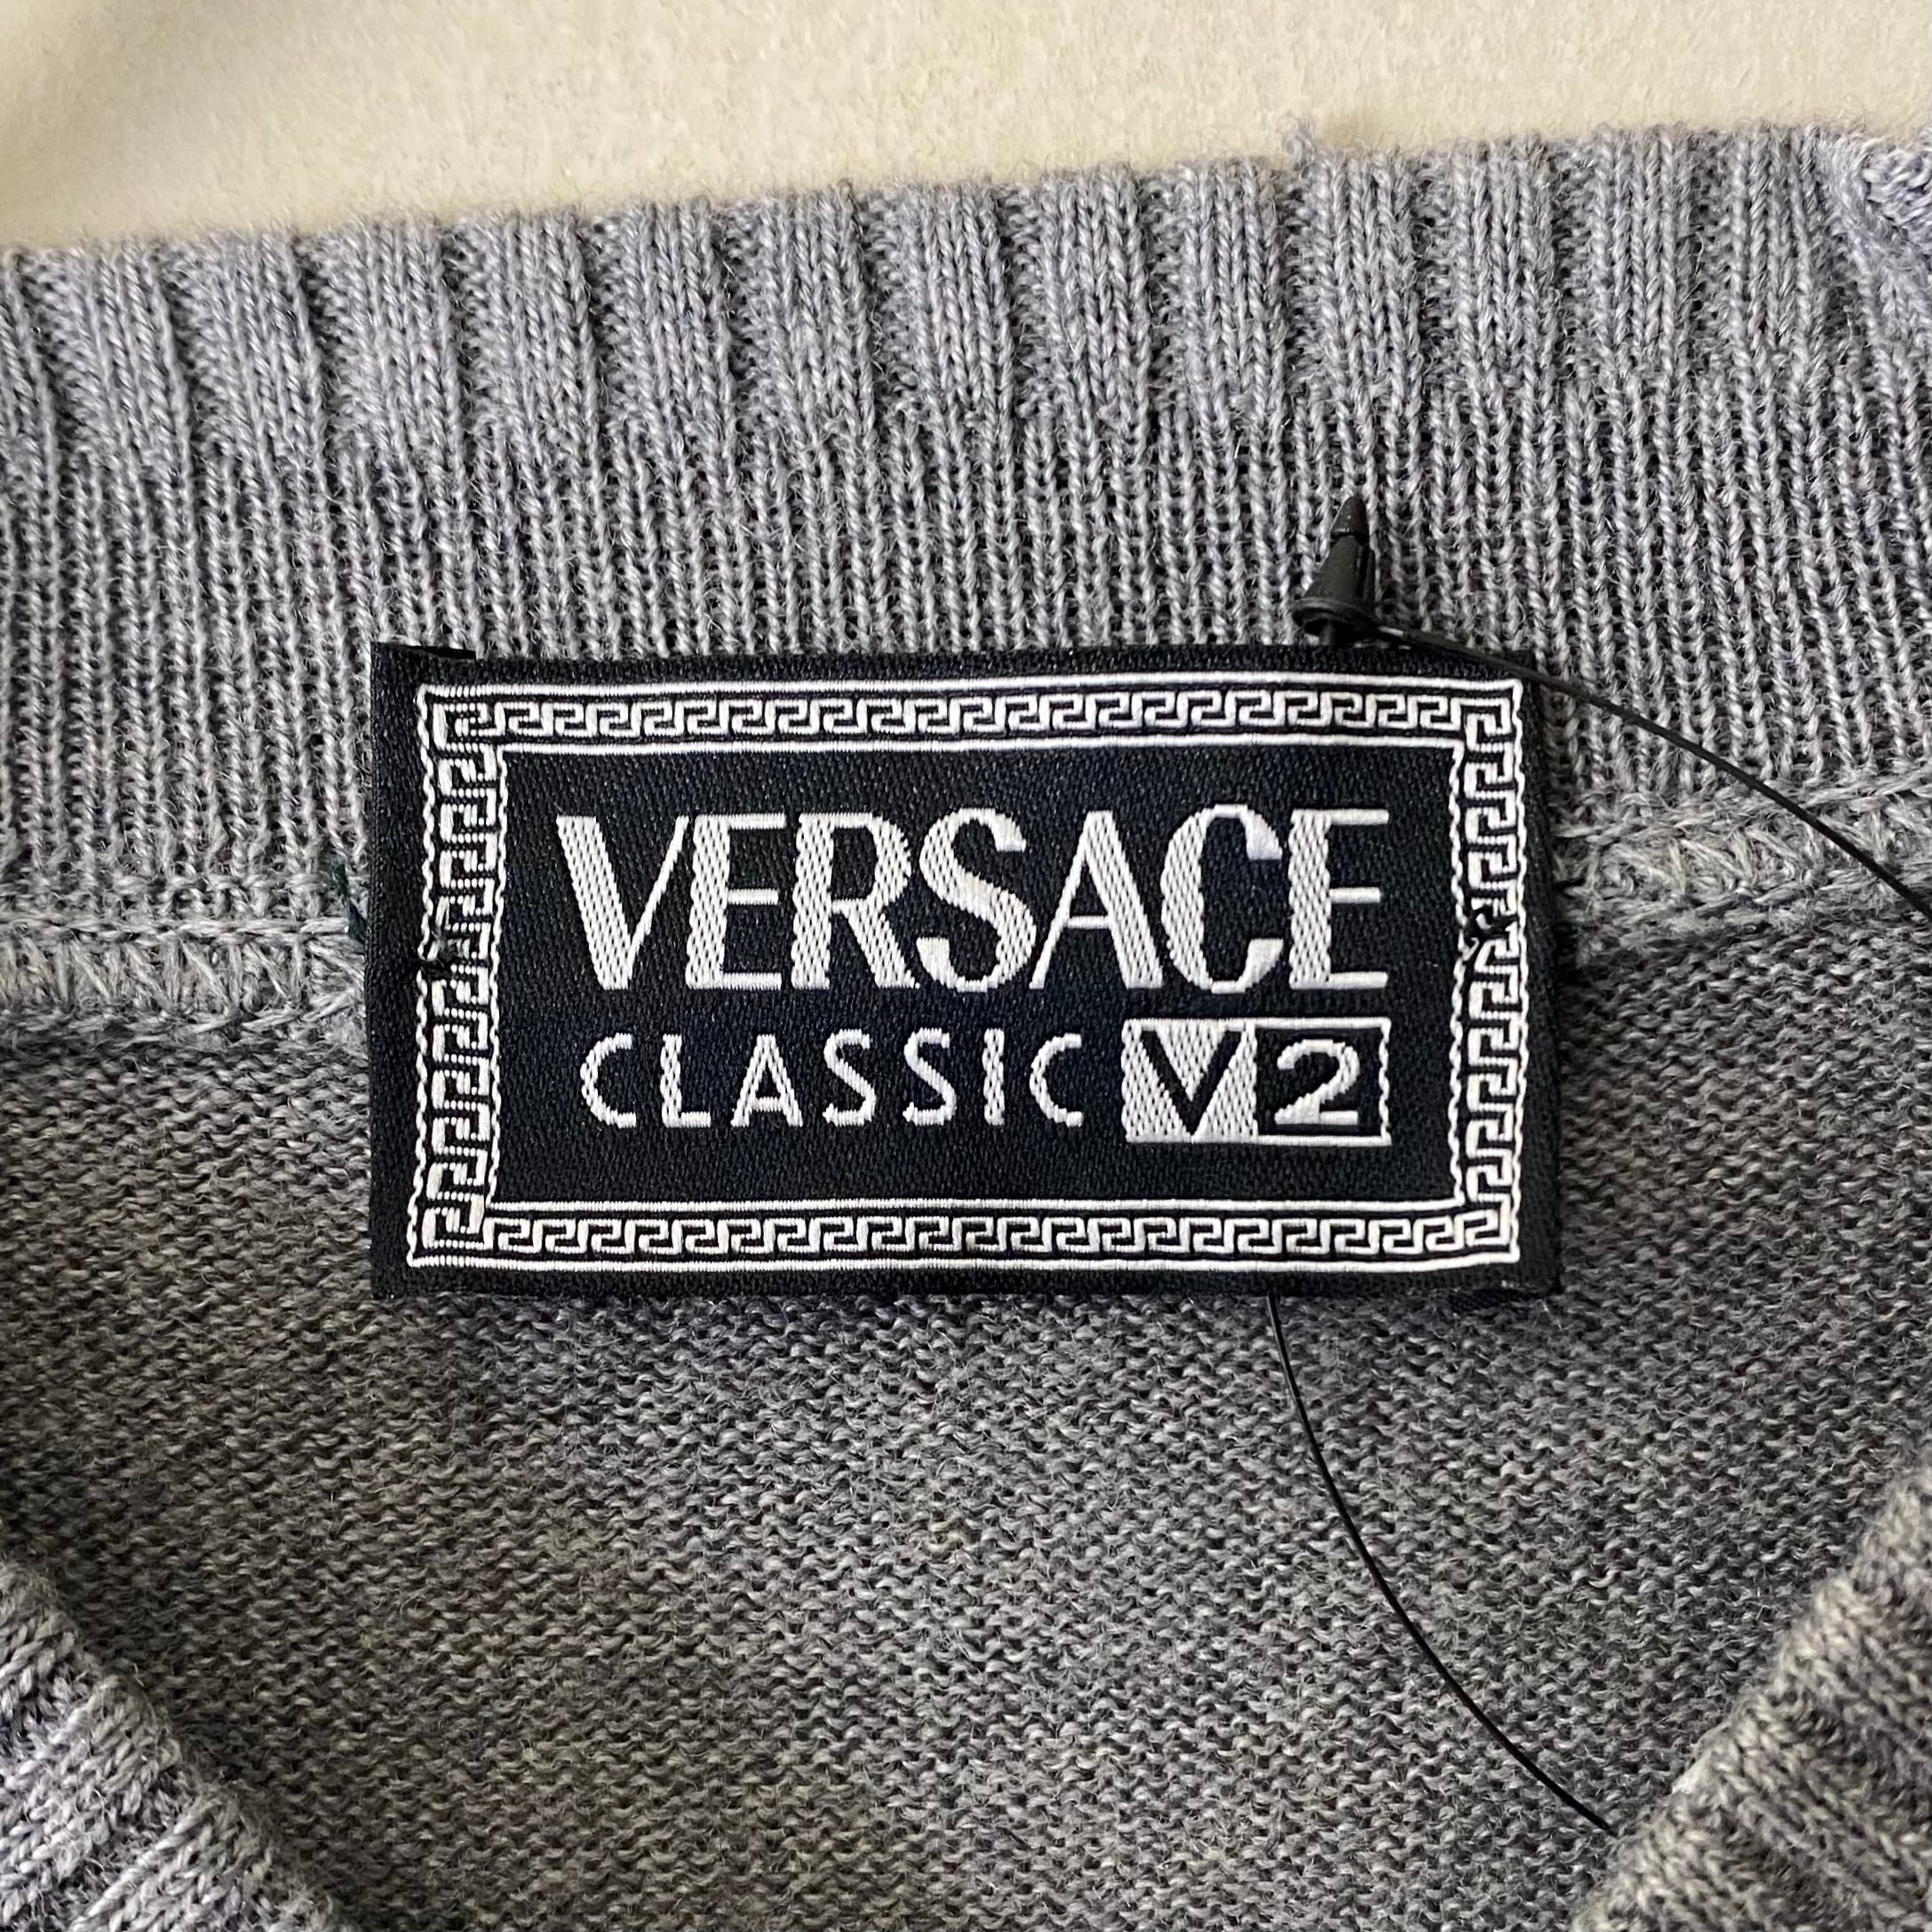 vintage VERSACE CLASSIC V2 pullover knit vest   NOIR ONLINE powered by BASE